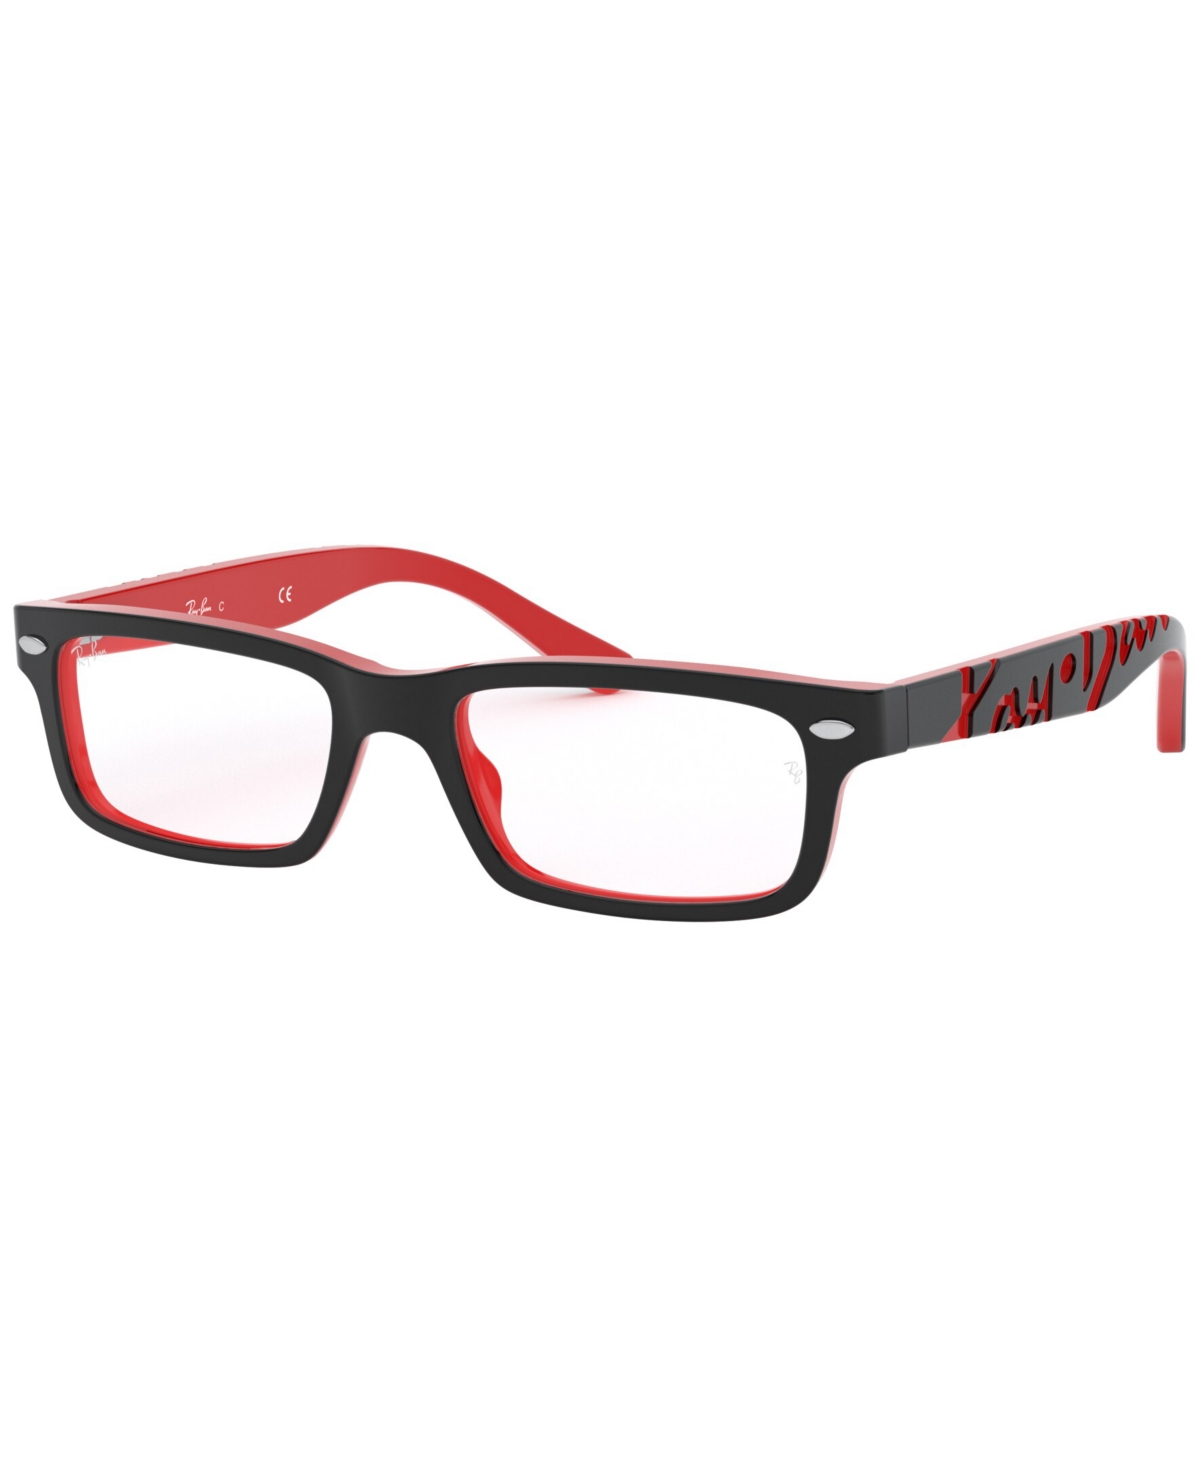 RY1535 Child Rectangle Eyeglasses - Black